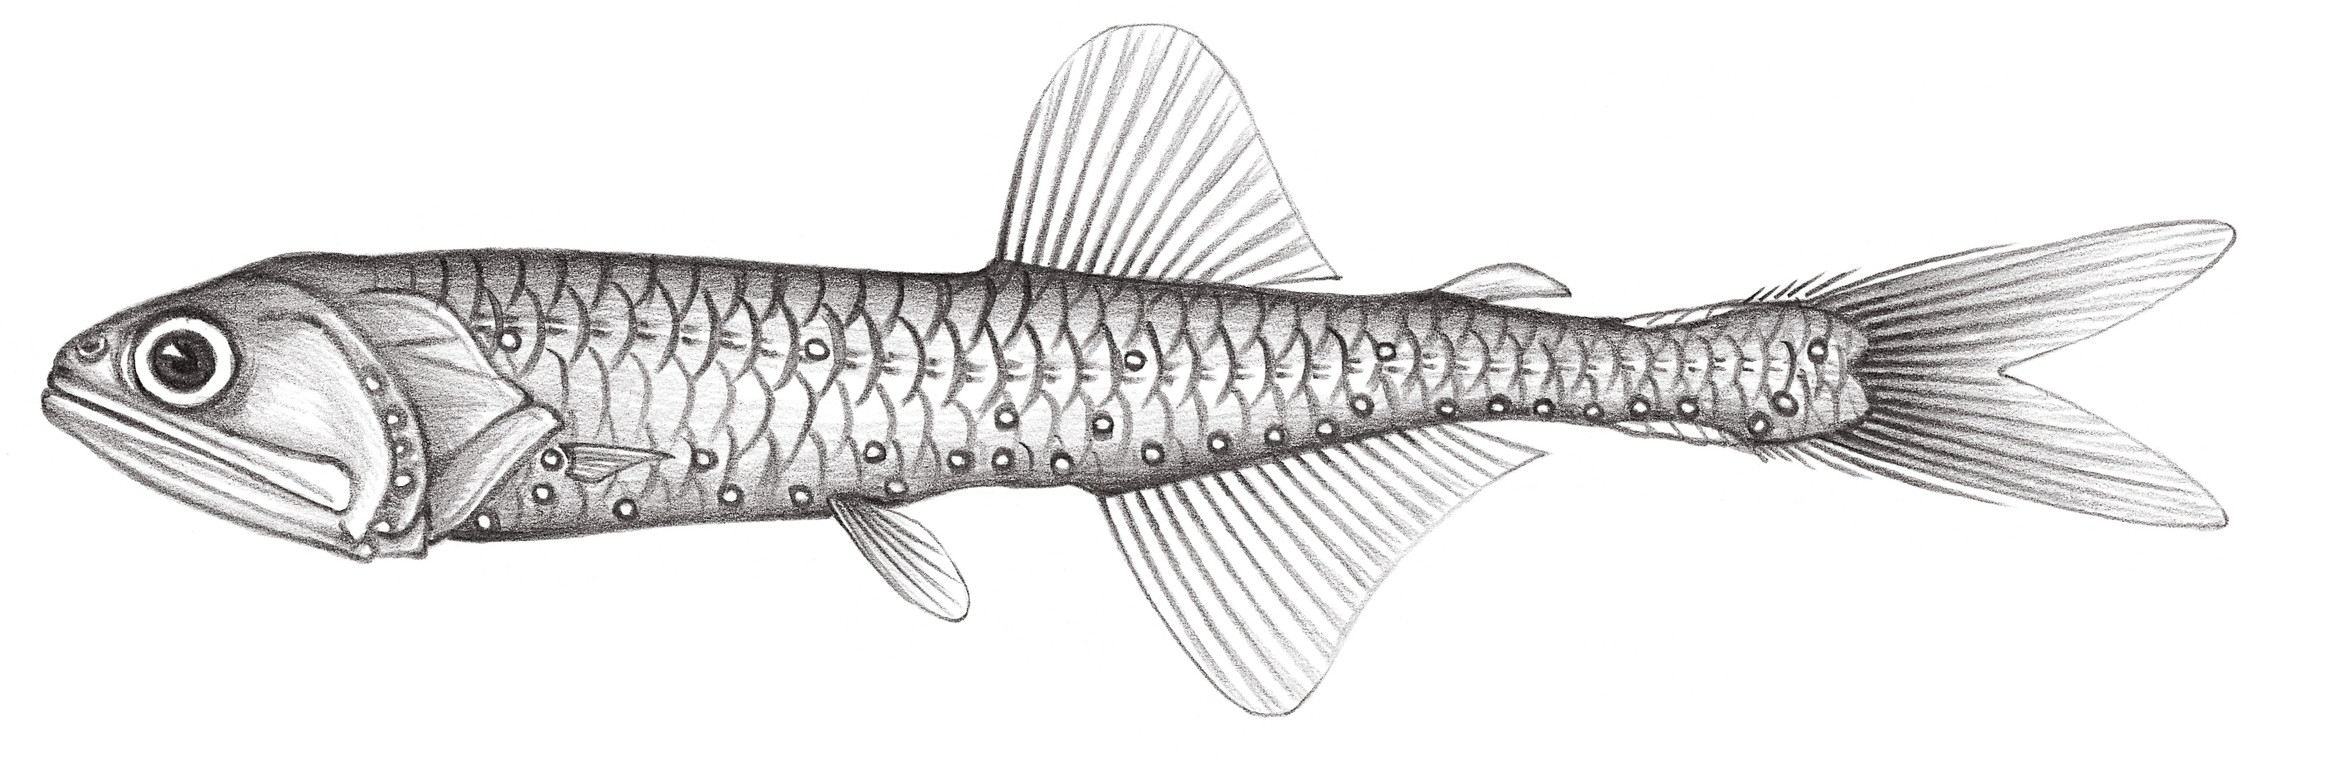 536.	黑尾燈魚 Triphoturus nigrescens (Brauer, 1904)